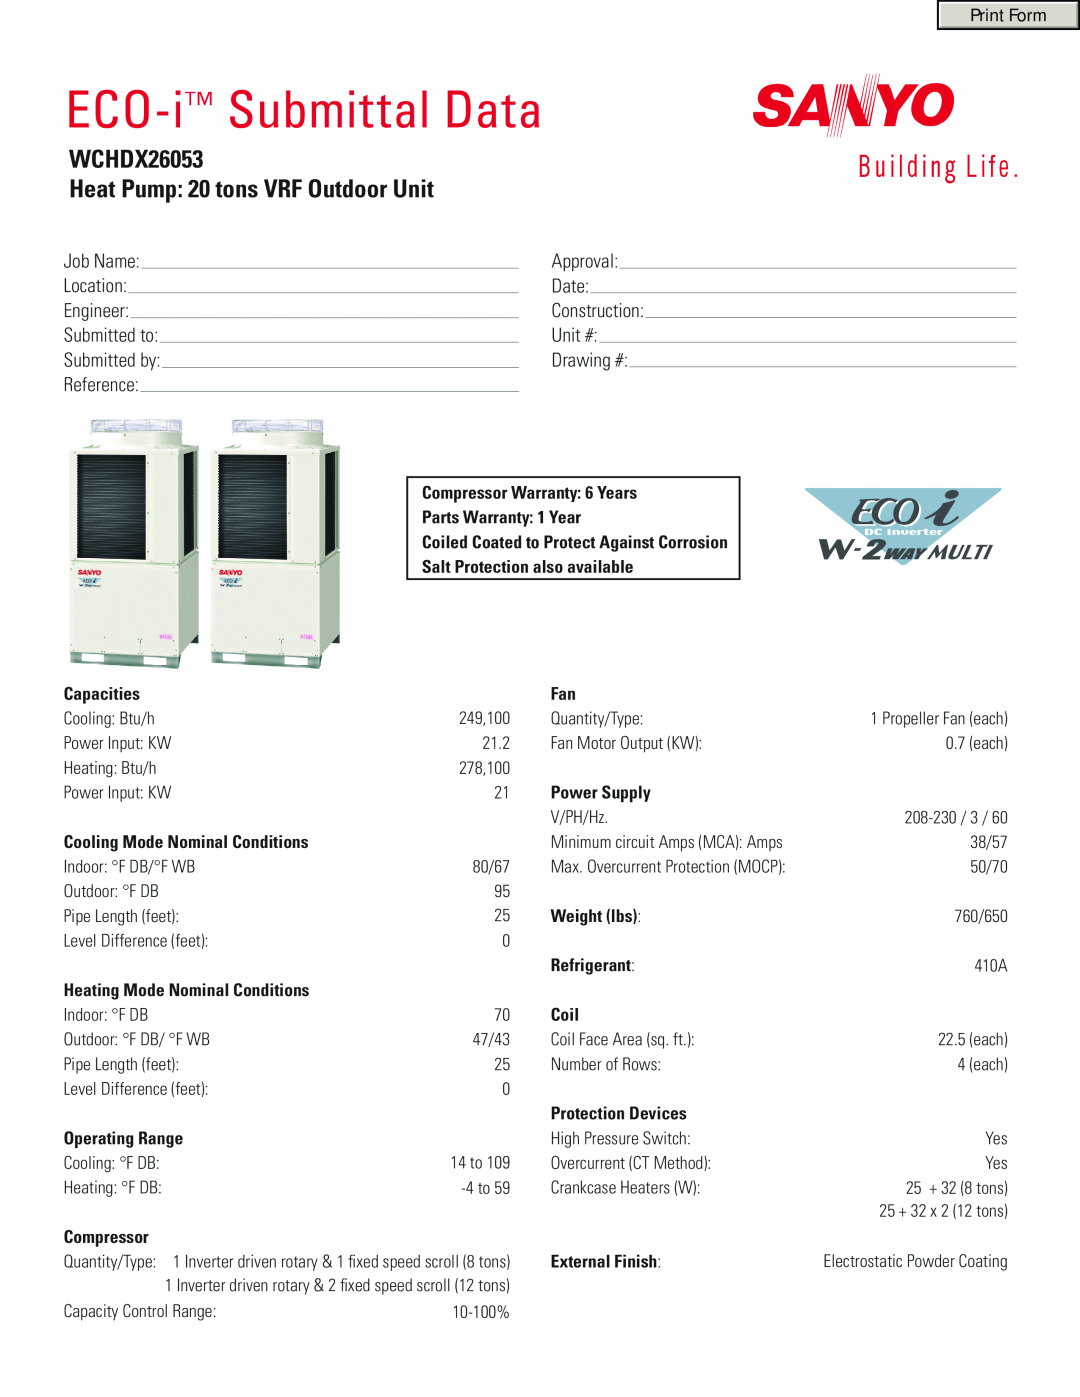 Sanyo warranty ECO-i Submittal Data, WCHDX26053 Heat Pump 20 tons VRF Outdoor Unit 